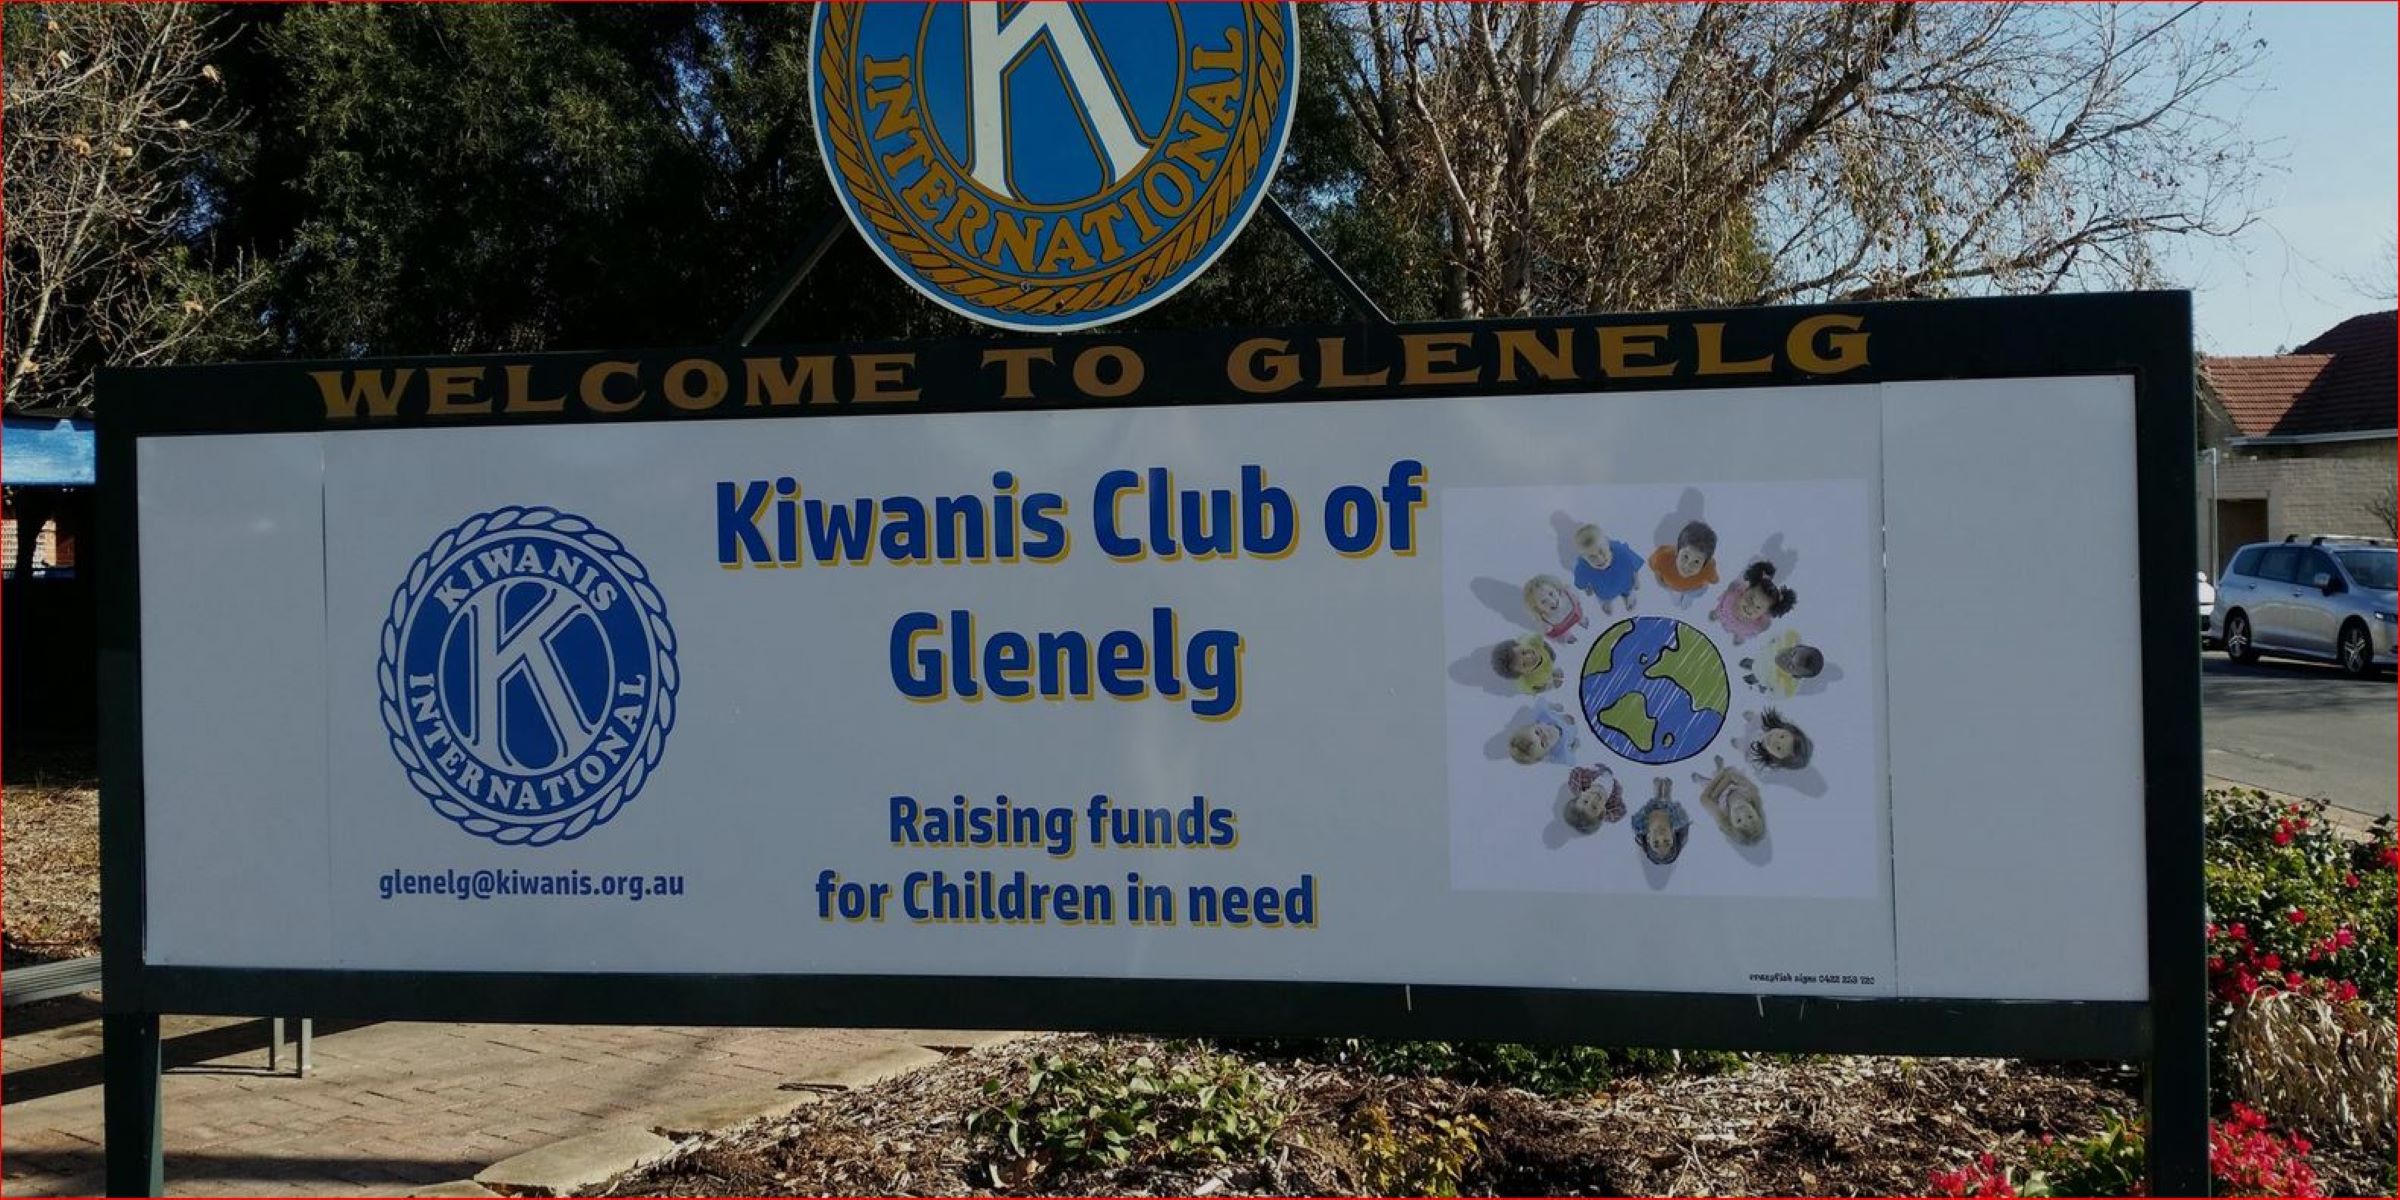 Kiwanis Club of Glenelg